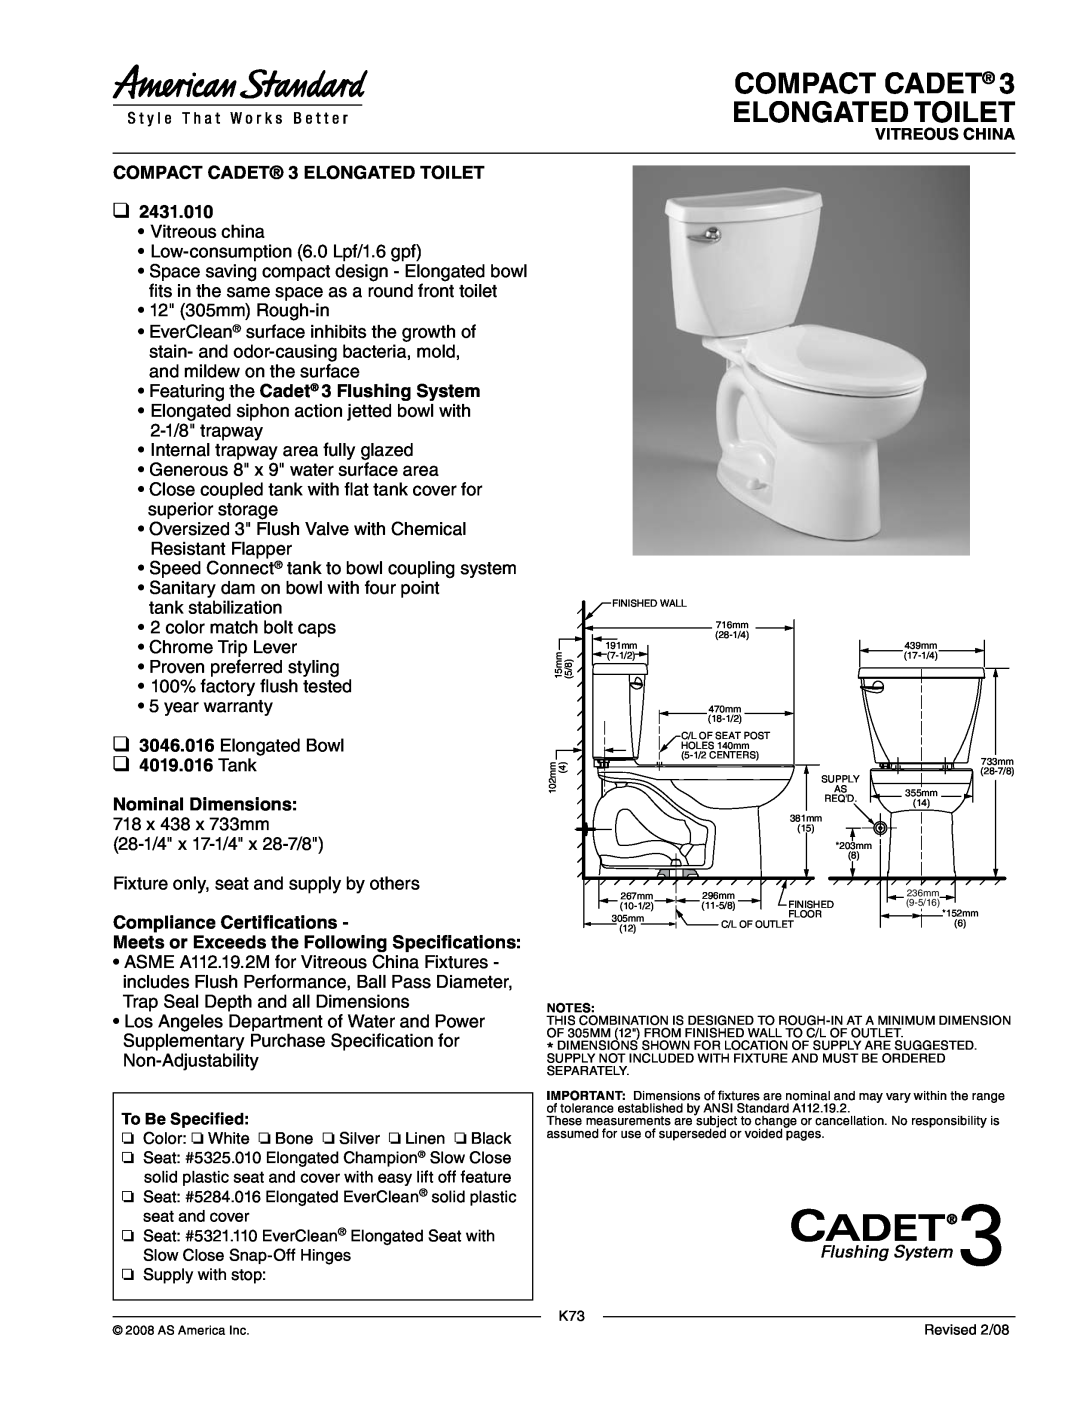 American Standard 3046.016, 2431.010 dimensions Compact Cadet Elongated Toilet, COMPACT CADET 3 ELONGATED TOILET 